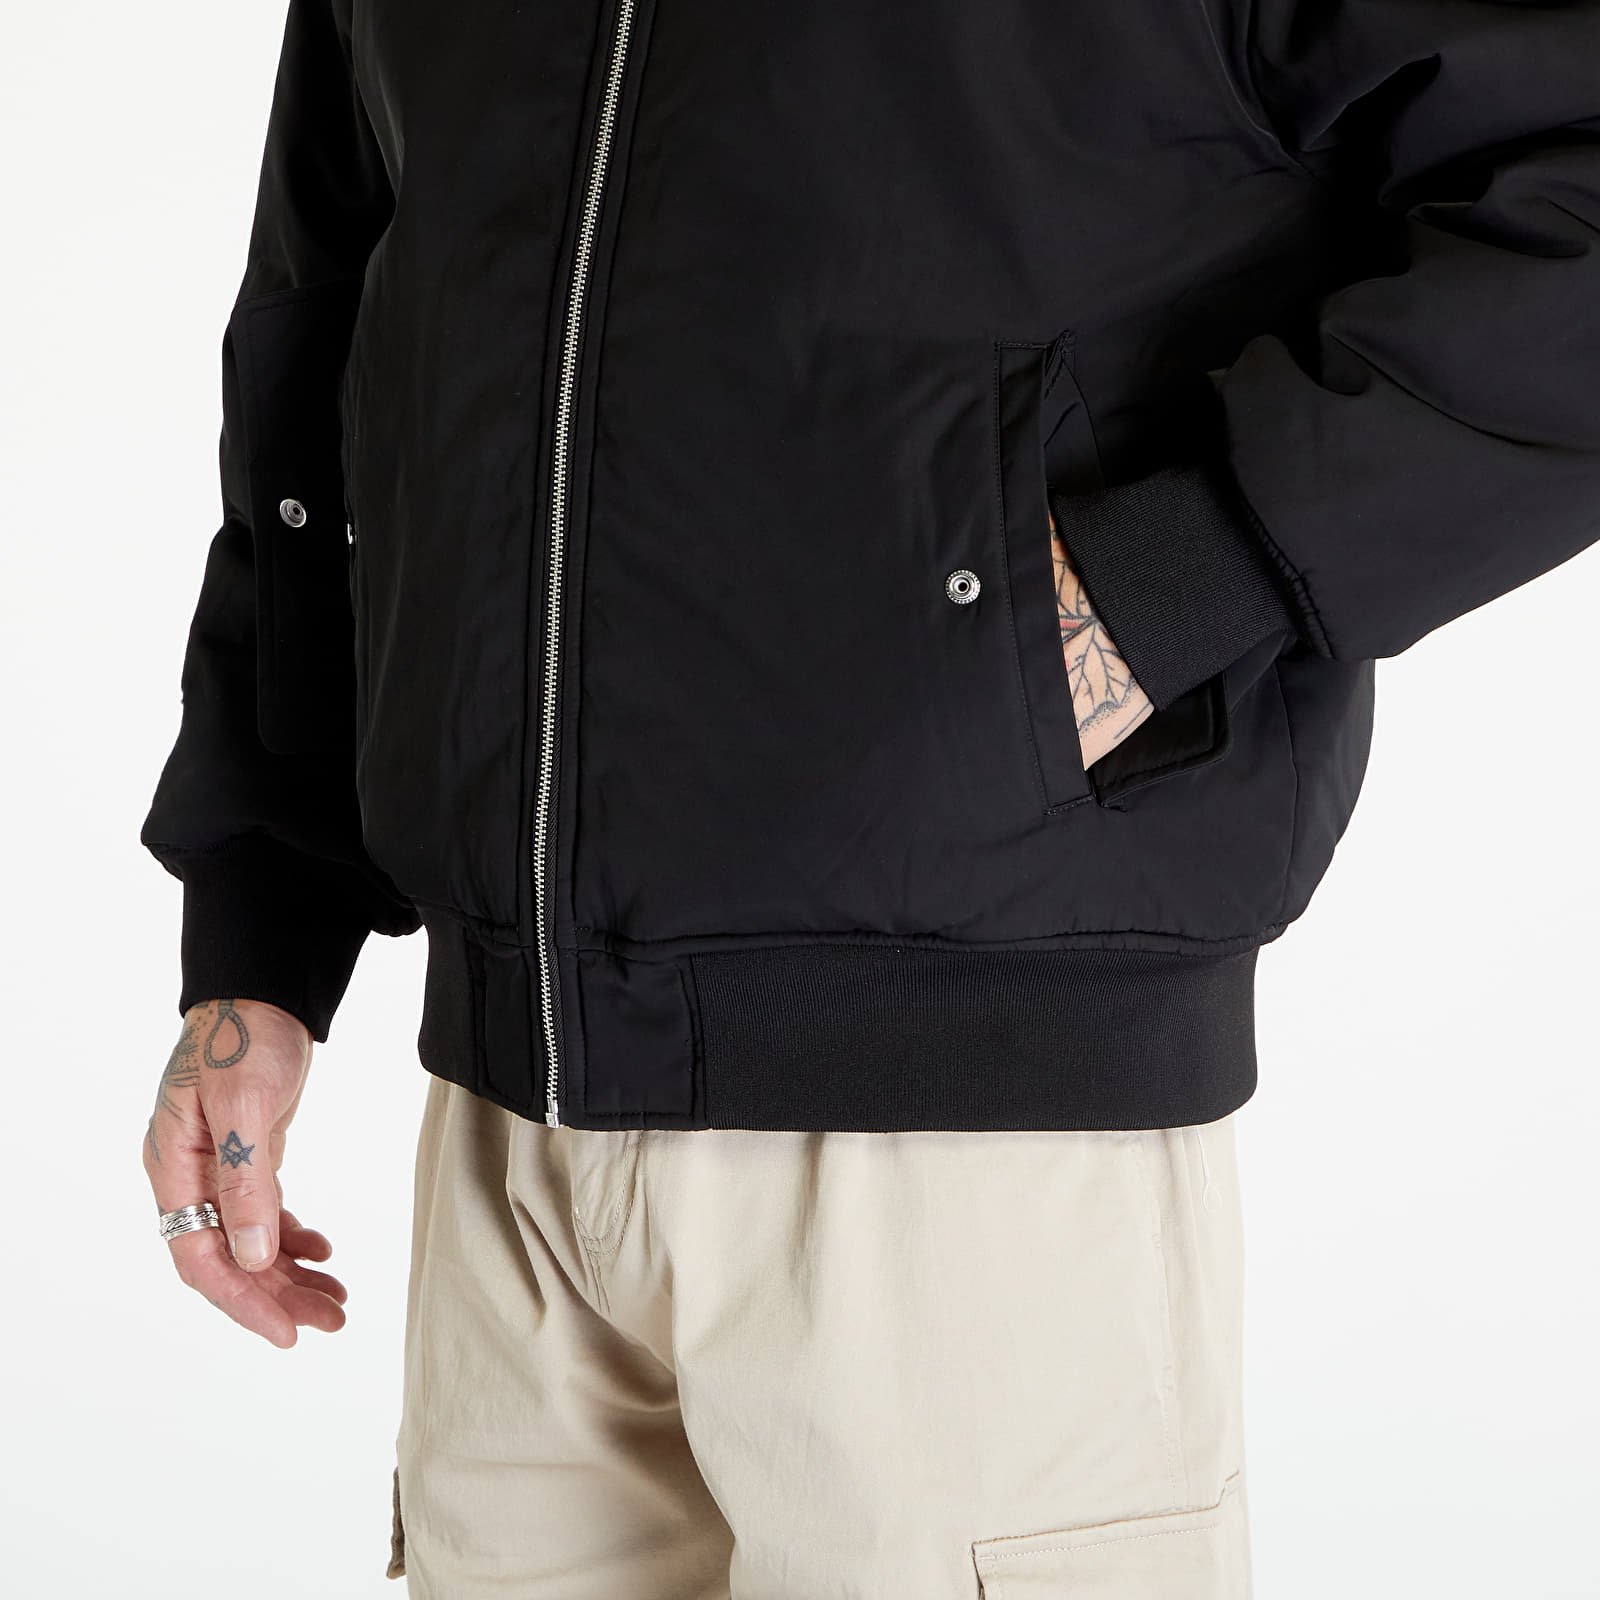 Jeans Reversible Sherpa Bomber Jacket Black/ Brown